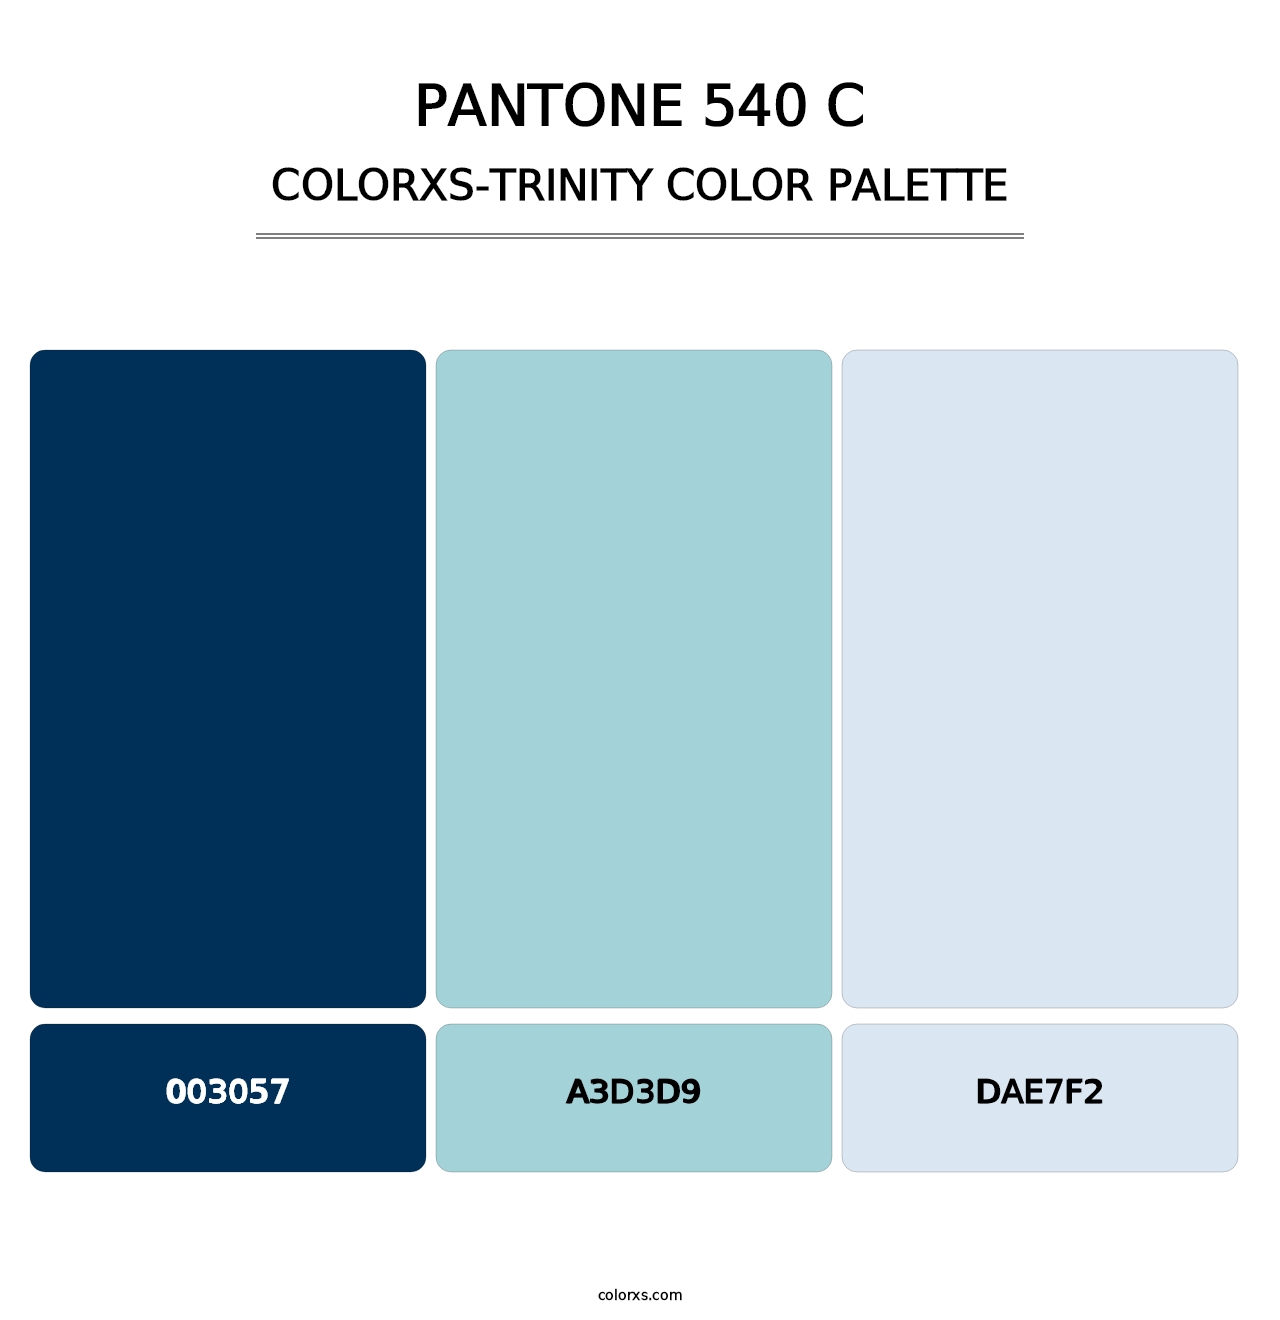 PANTONE 540 C - Colorxs Trinity Palette